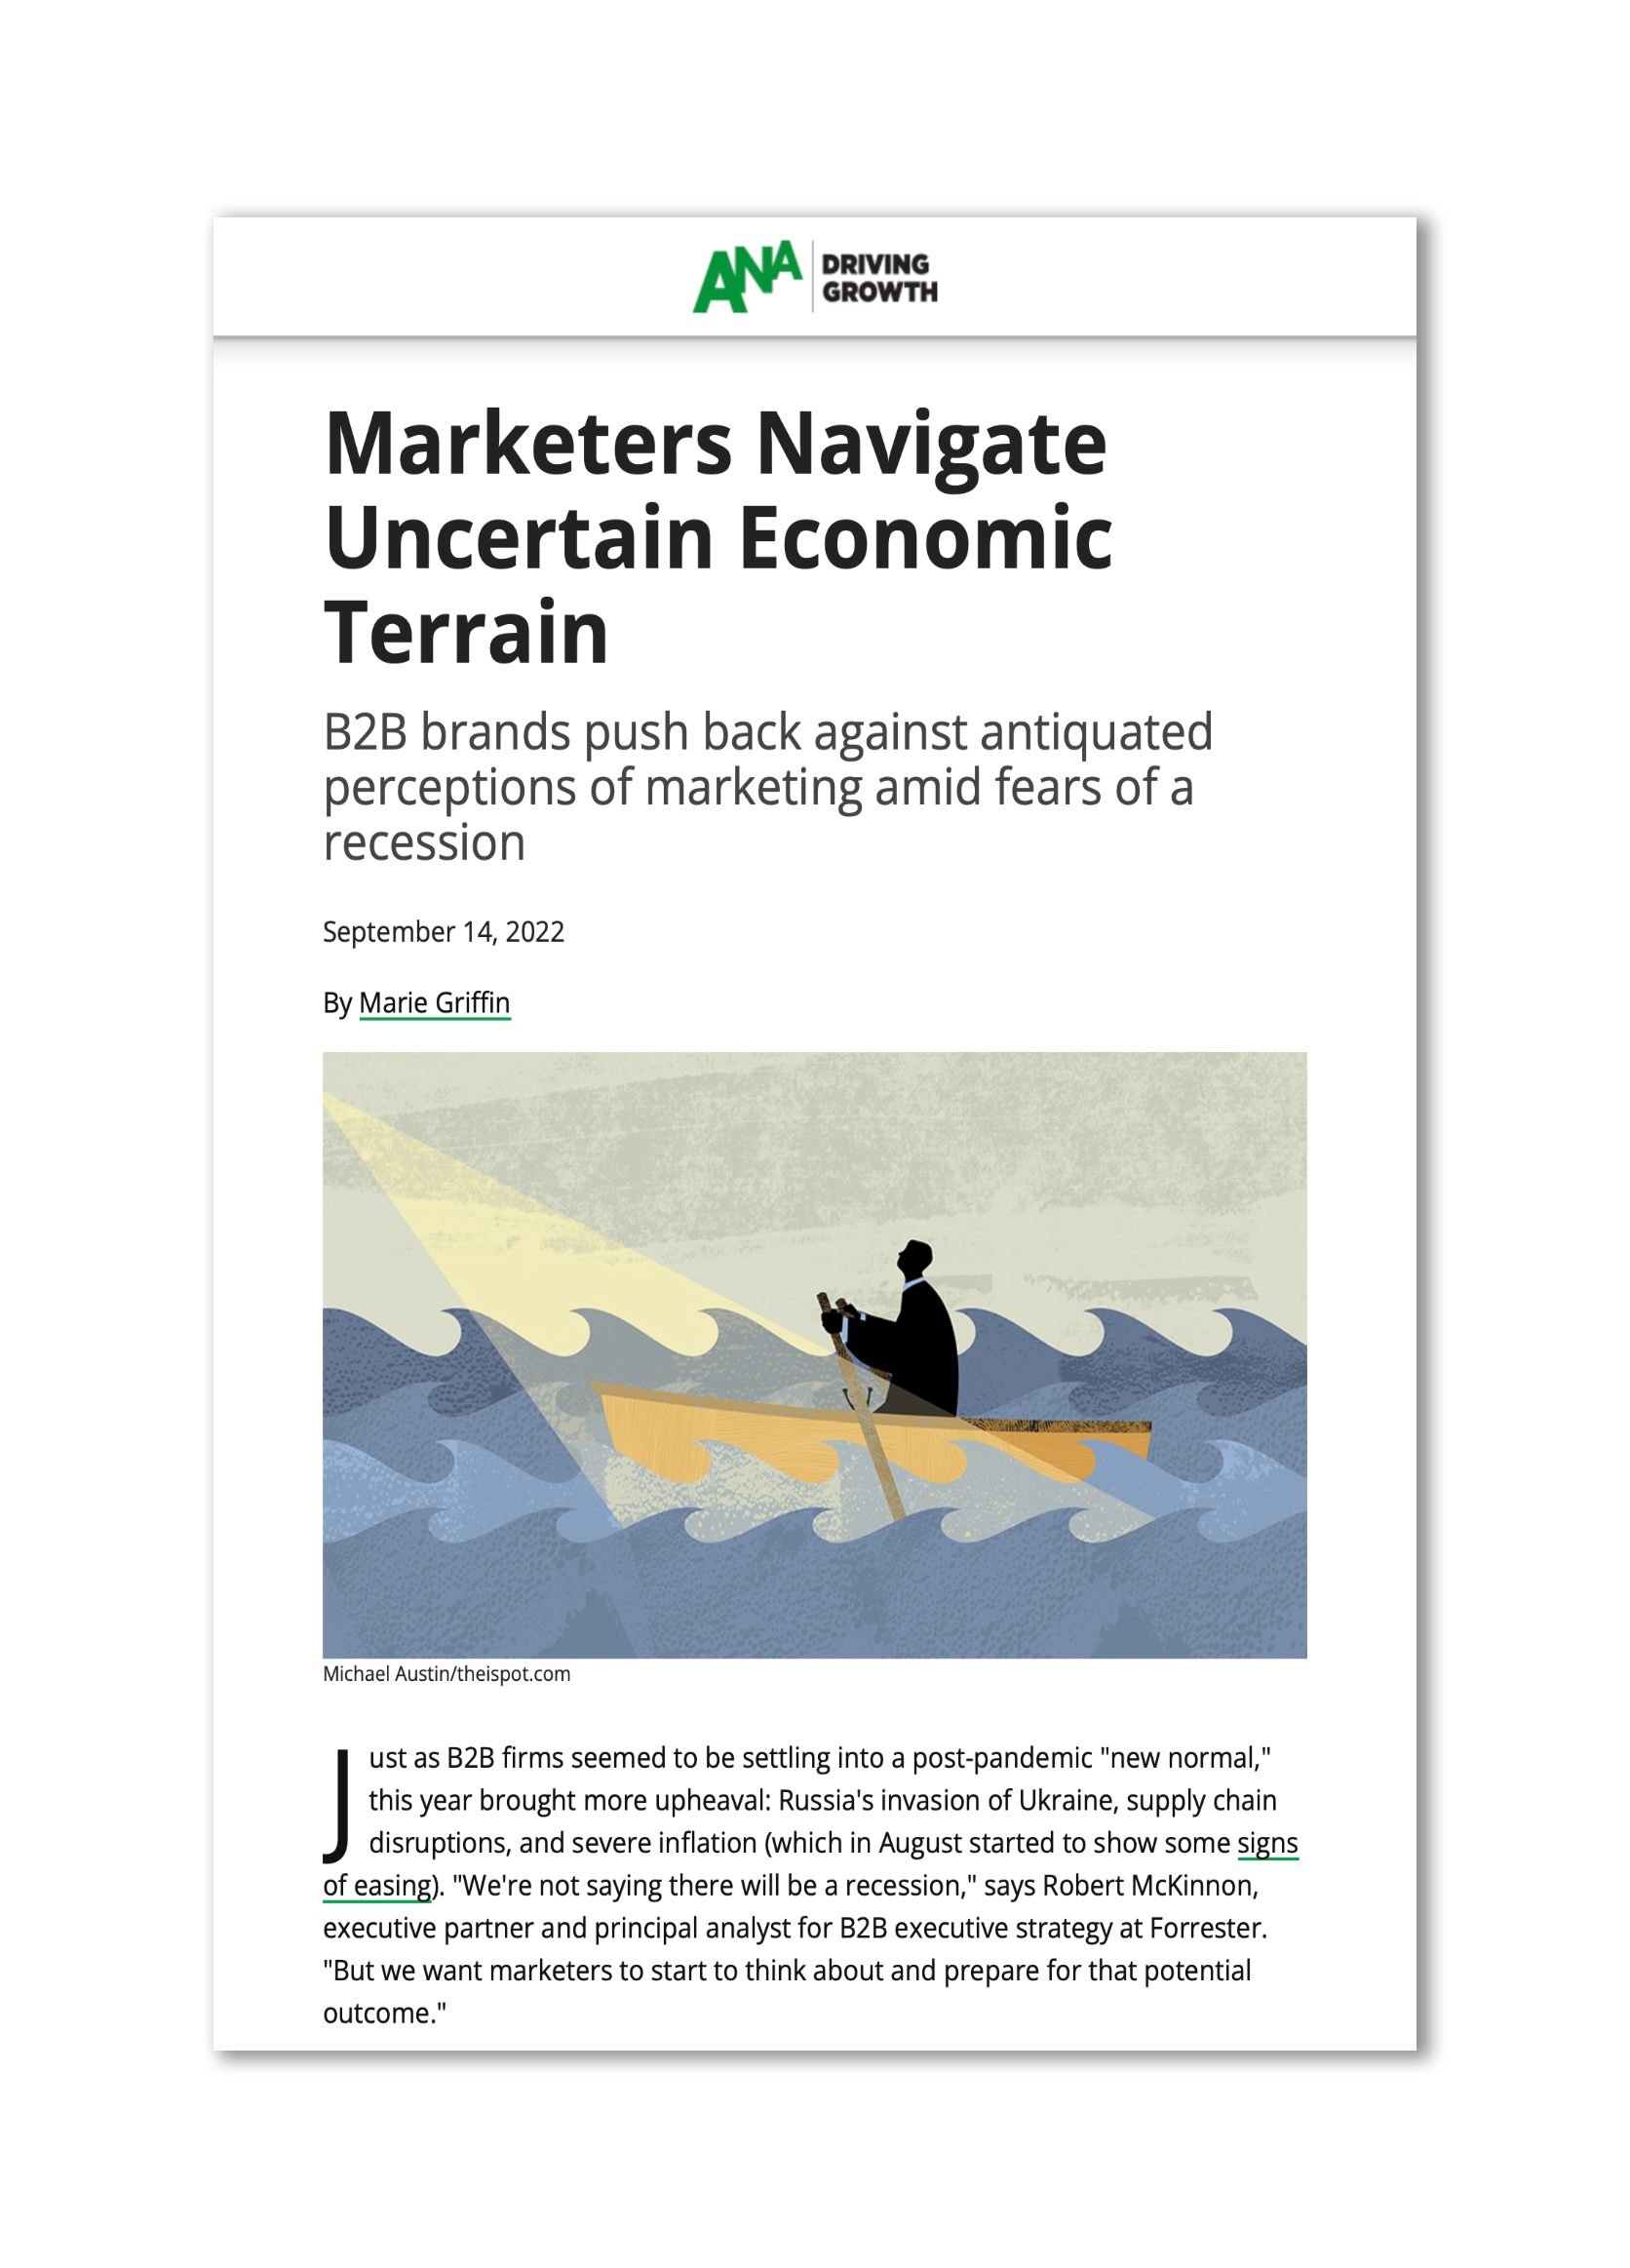 ANA: Marketers Navigate Uncertain Economic Terrain